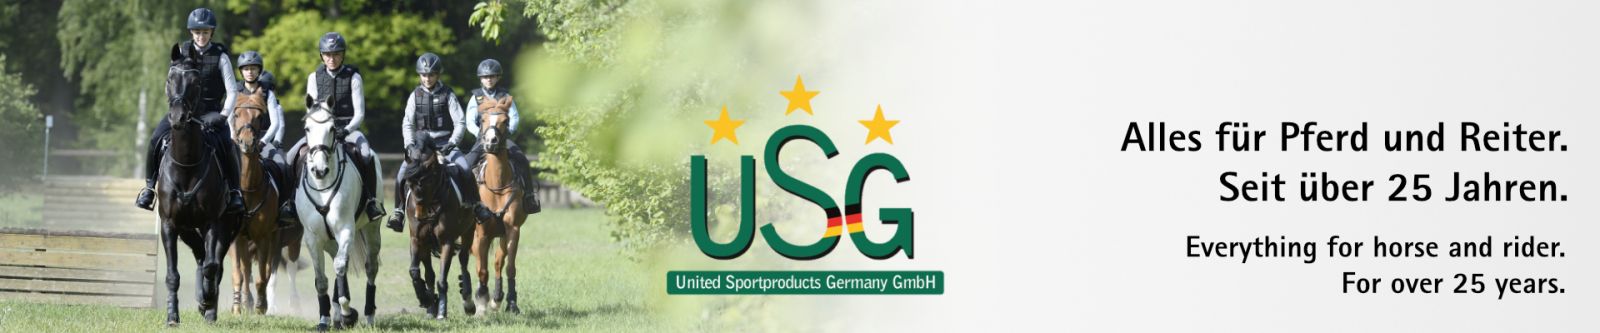 Datenschutz - USG - United Sportproducts Germany GmbH